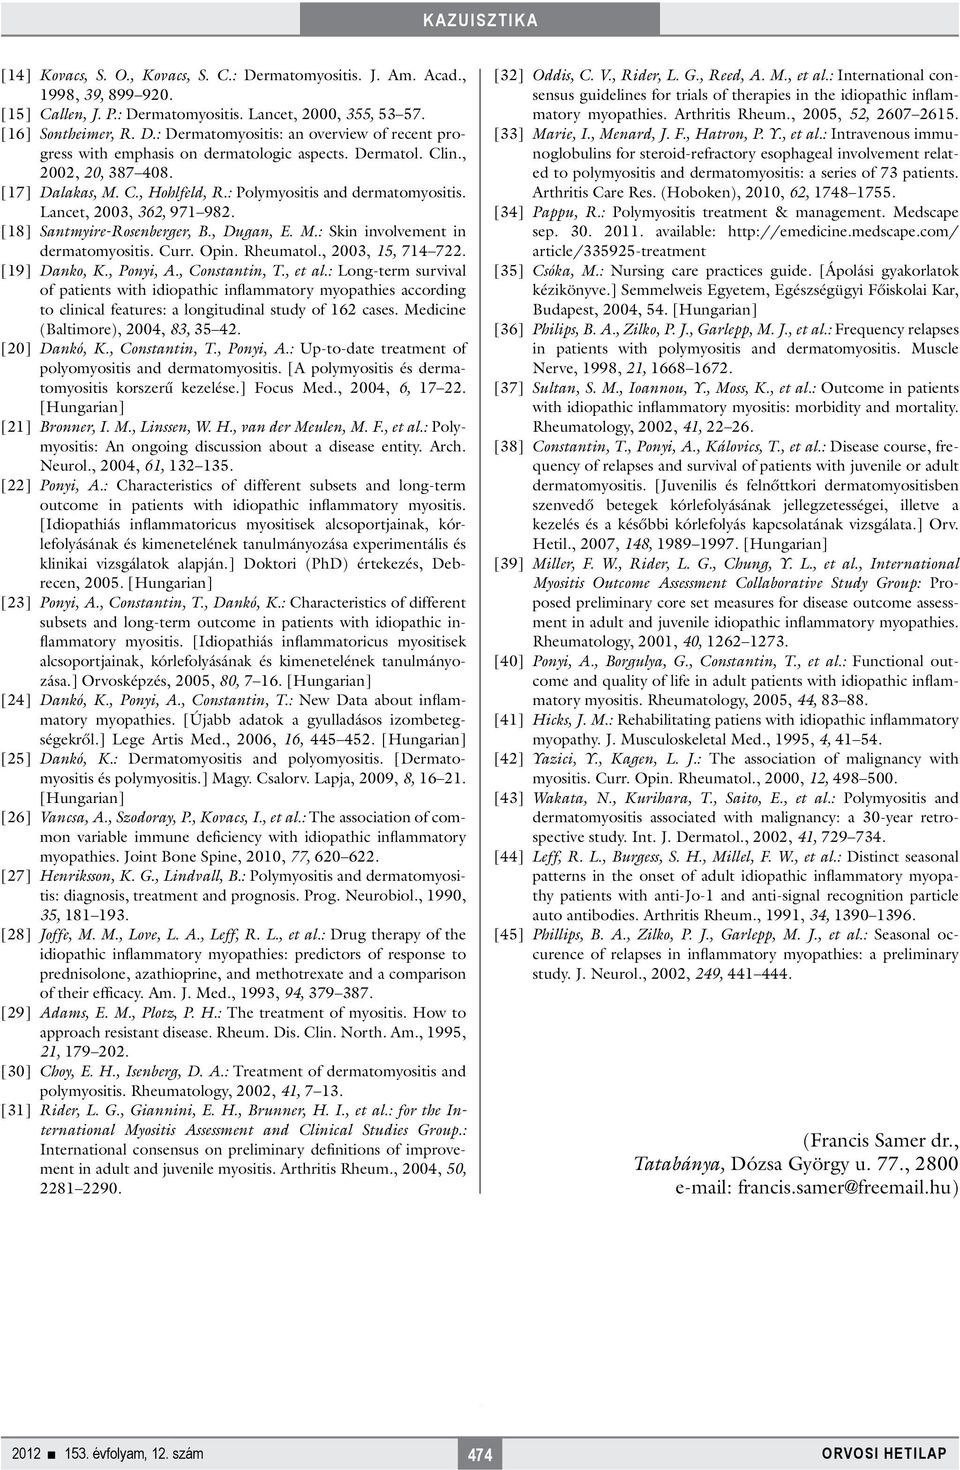 Curr. Opin. Rheumatol., 2003, 15, 714 722. [19] Danko, K., Ponyi, A., Constantin, T., et al.